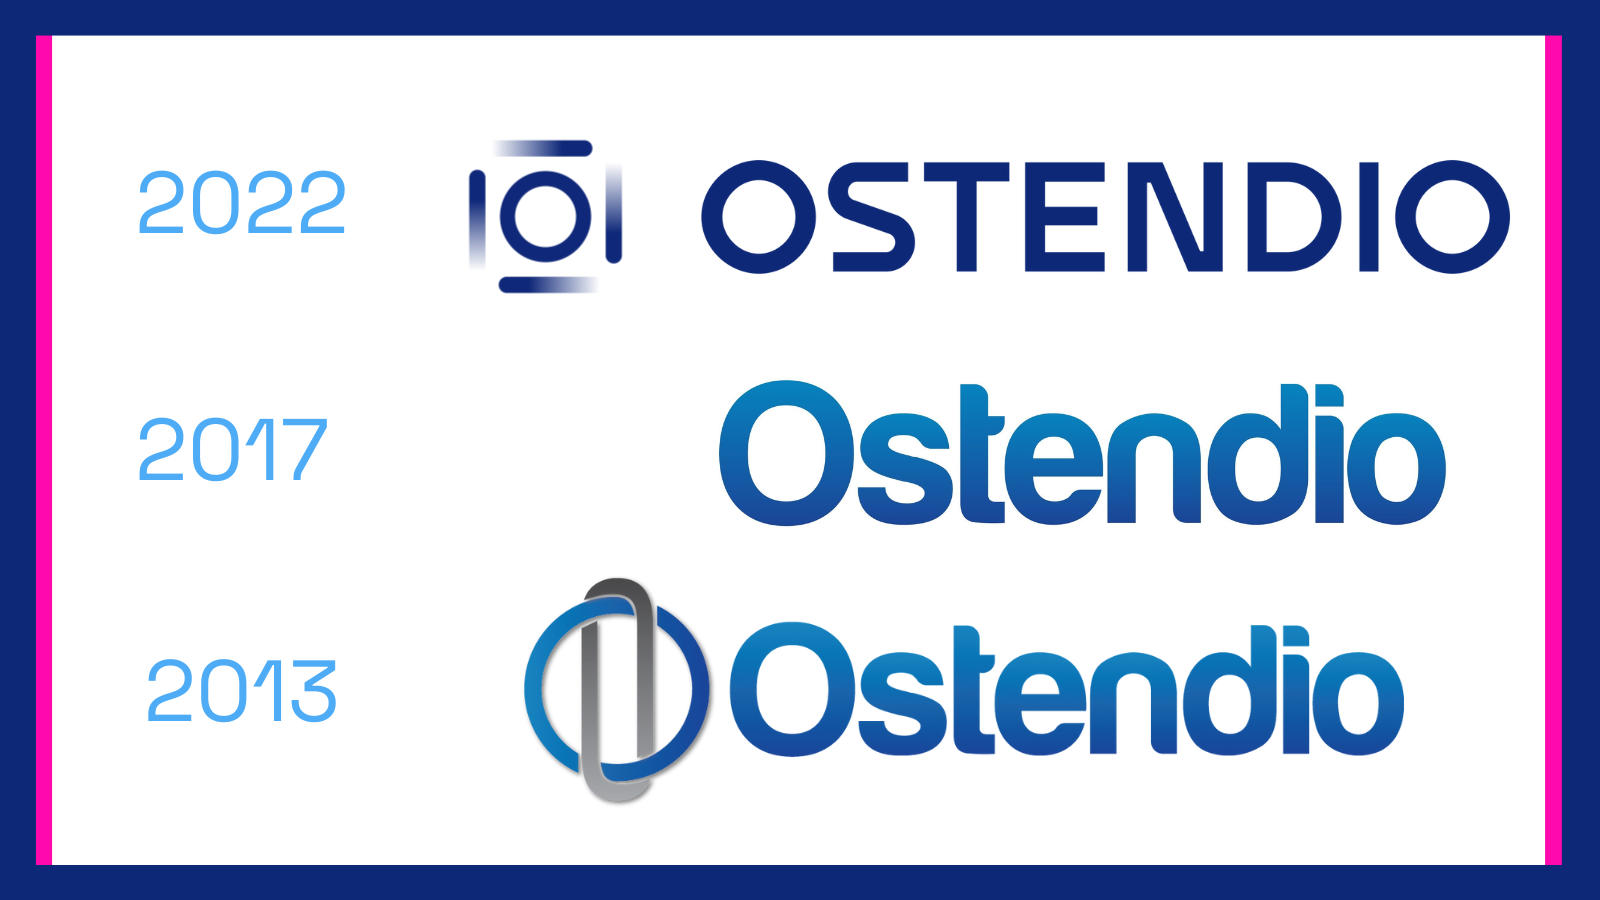 Ostendio logo change 2022 (3)